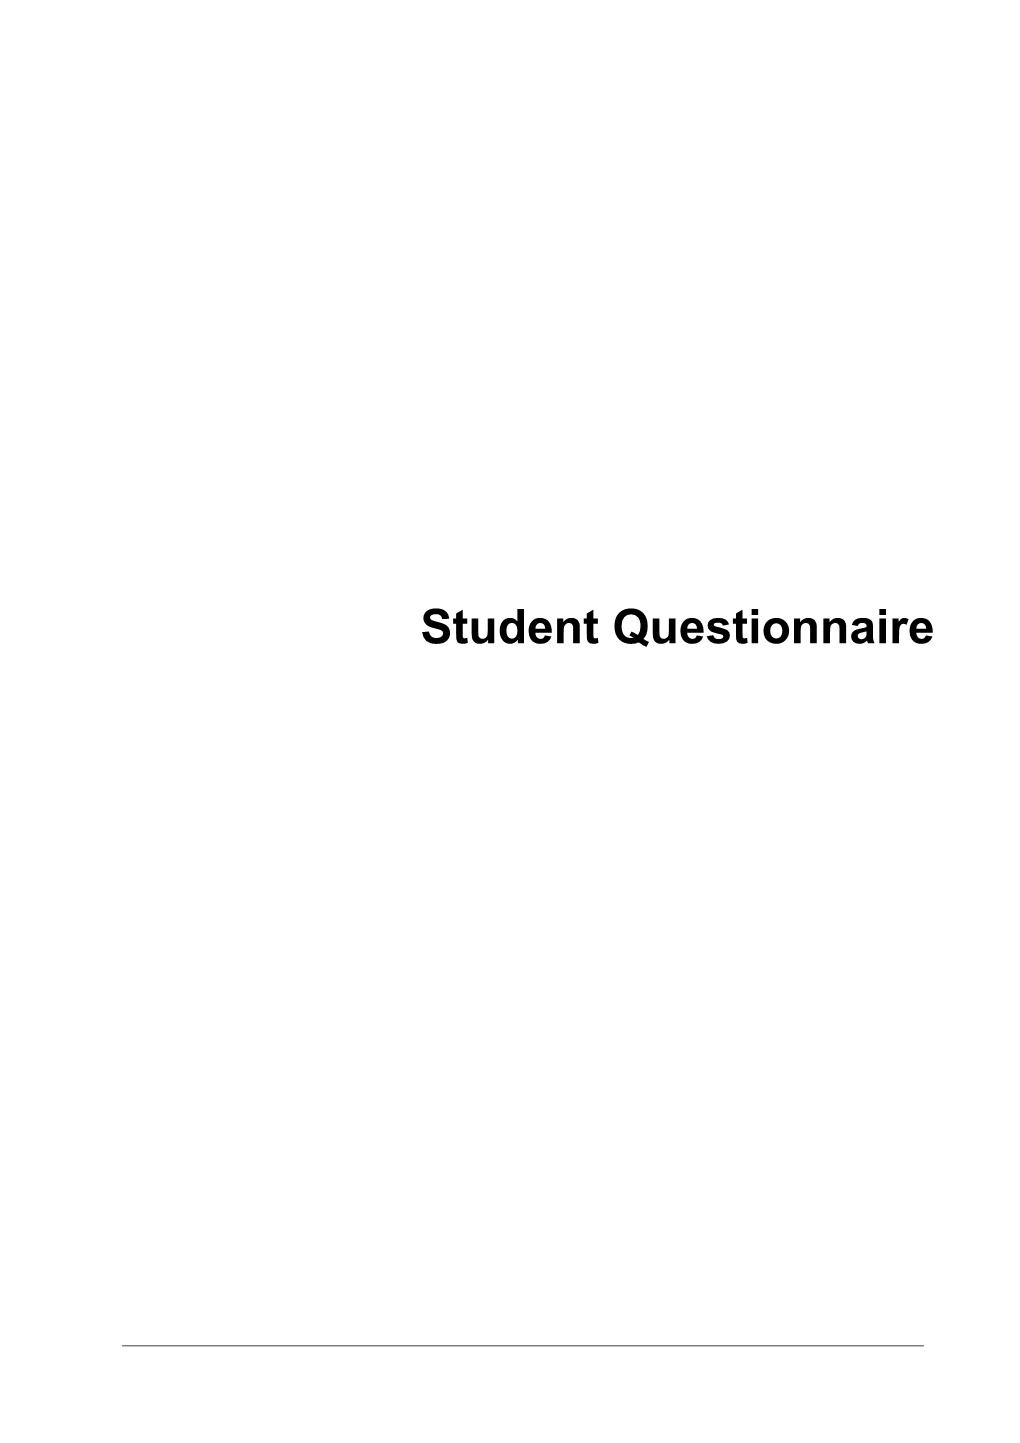 Student Questionnaire for Pisa 2006